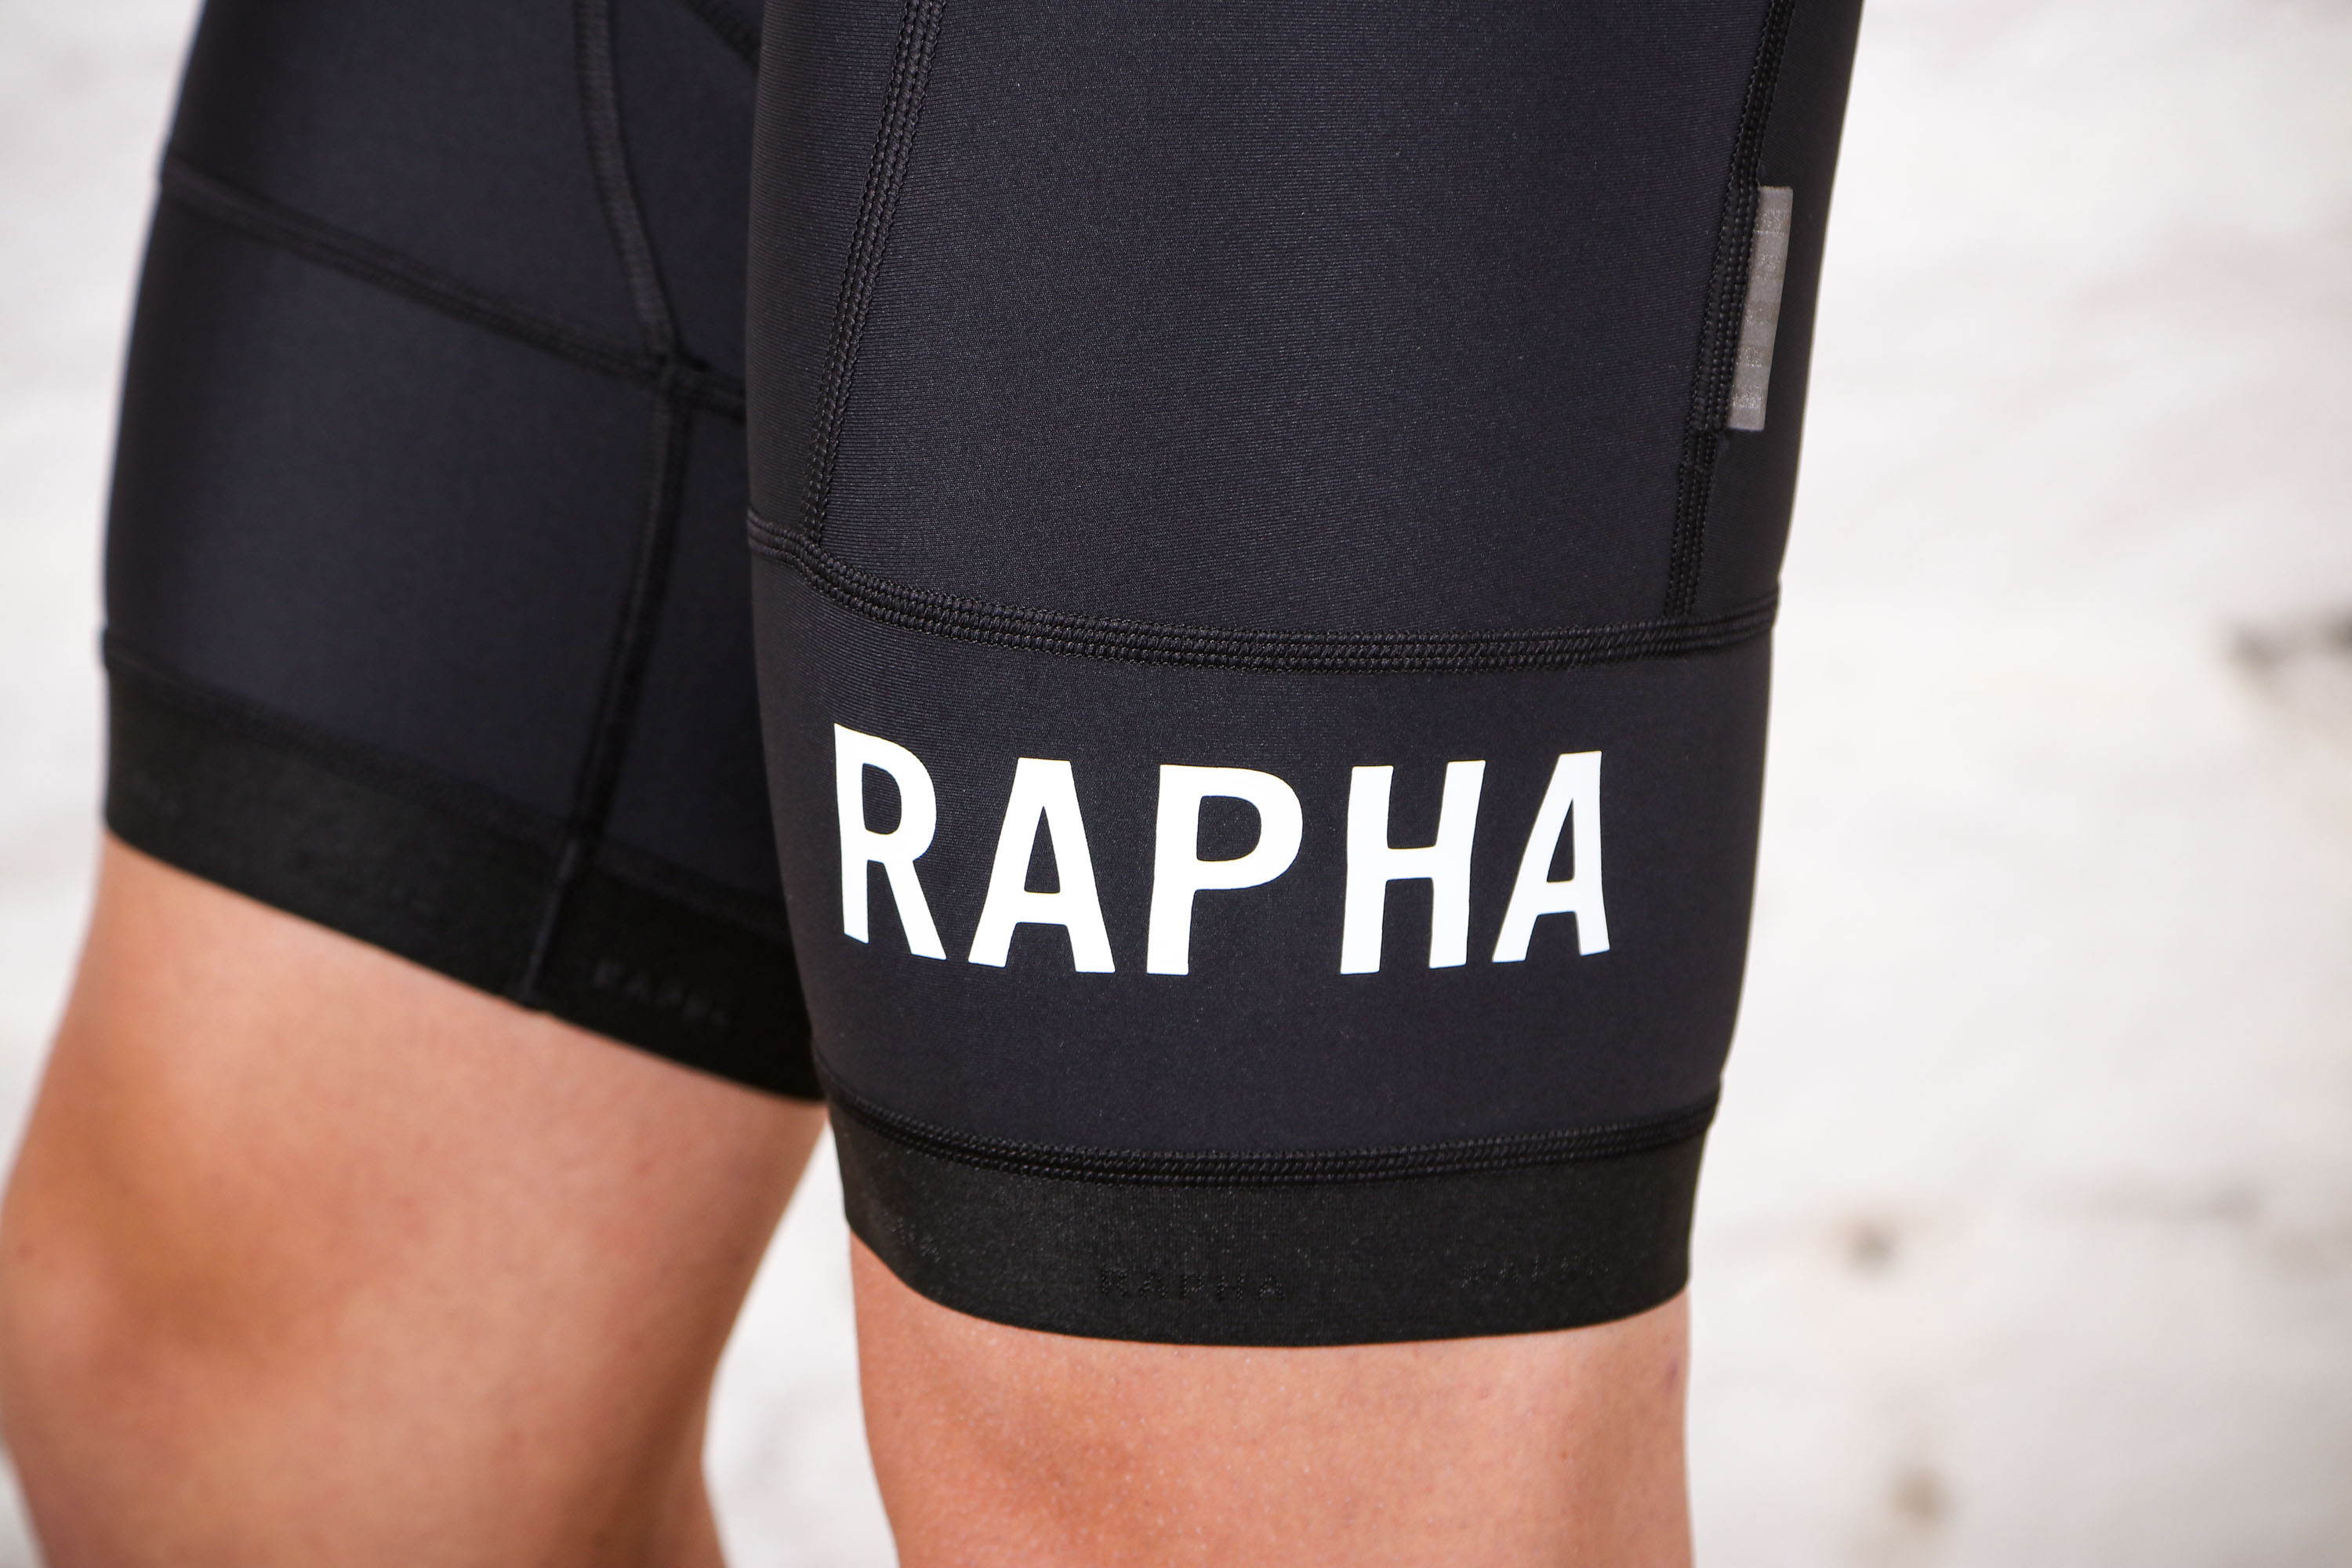 Review: Rapha Men’s Pro Team Training Bib Shorts | road.cc